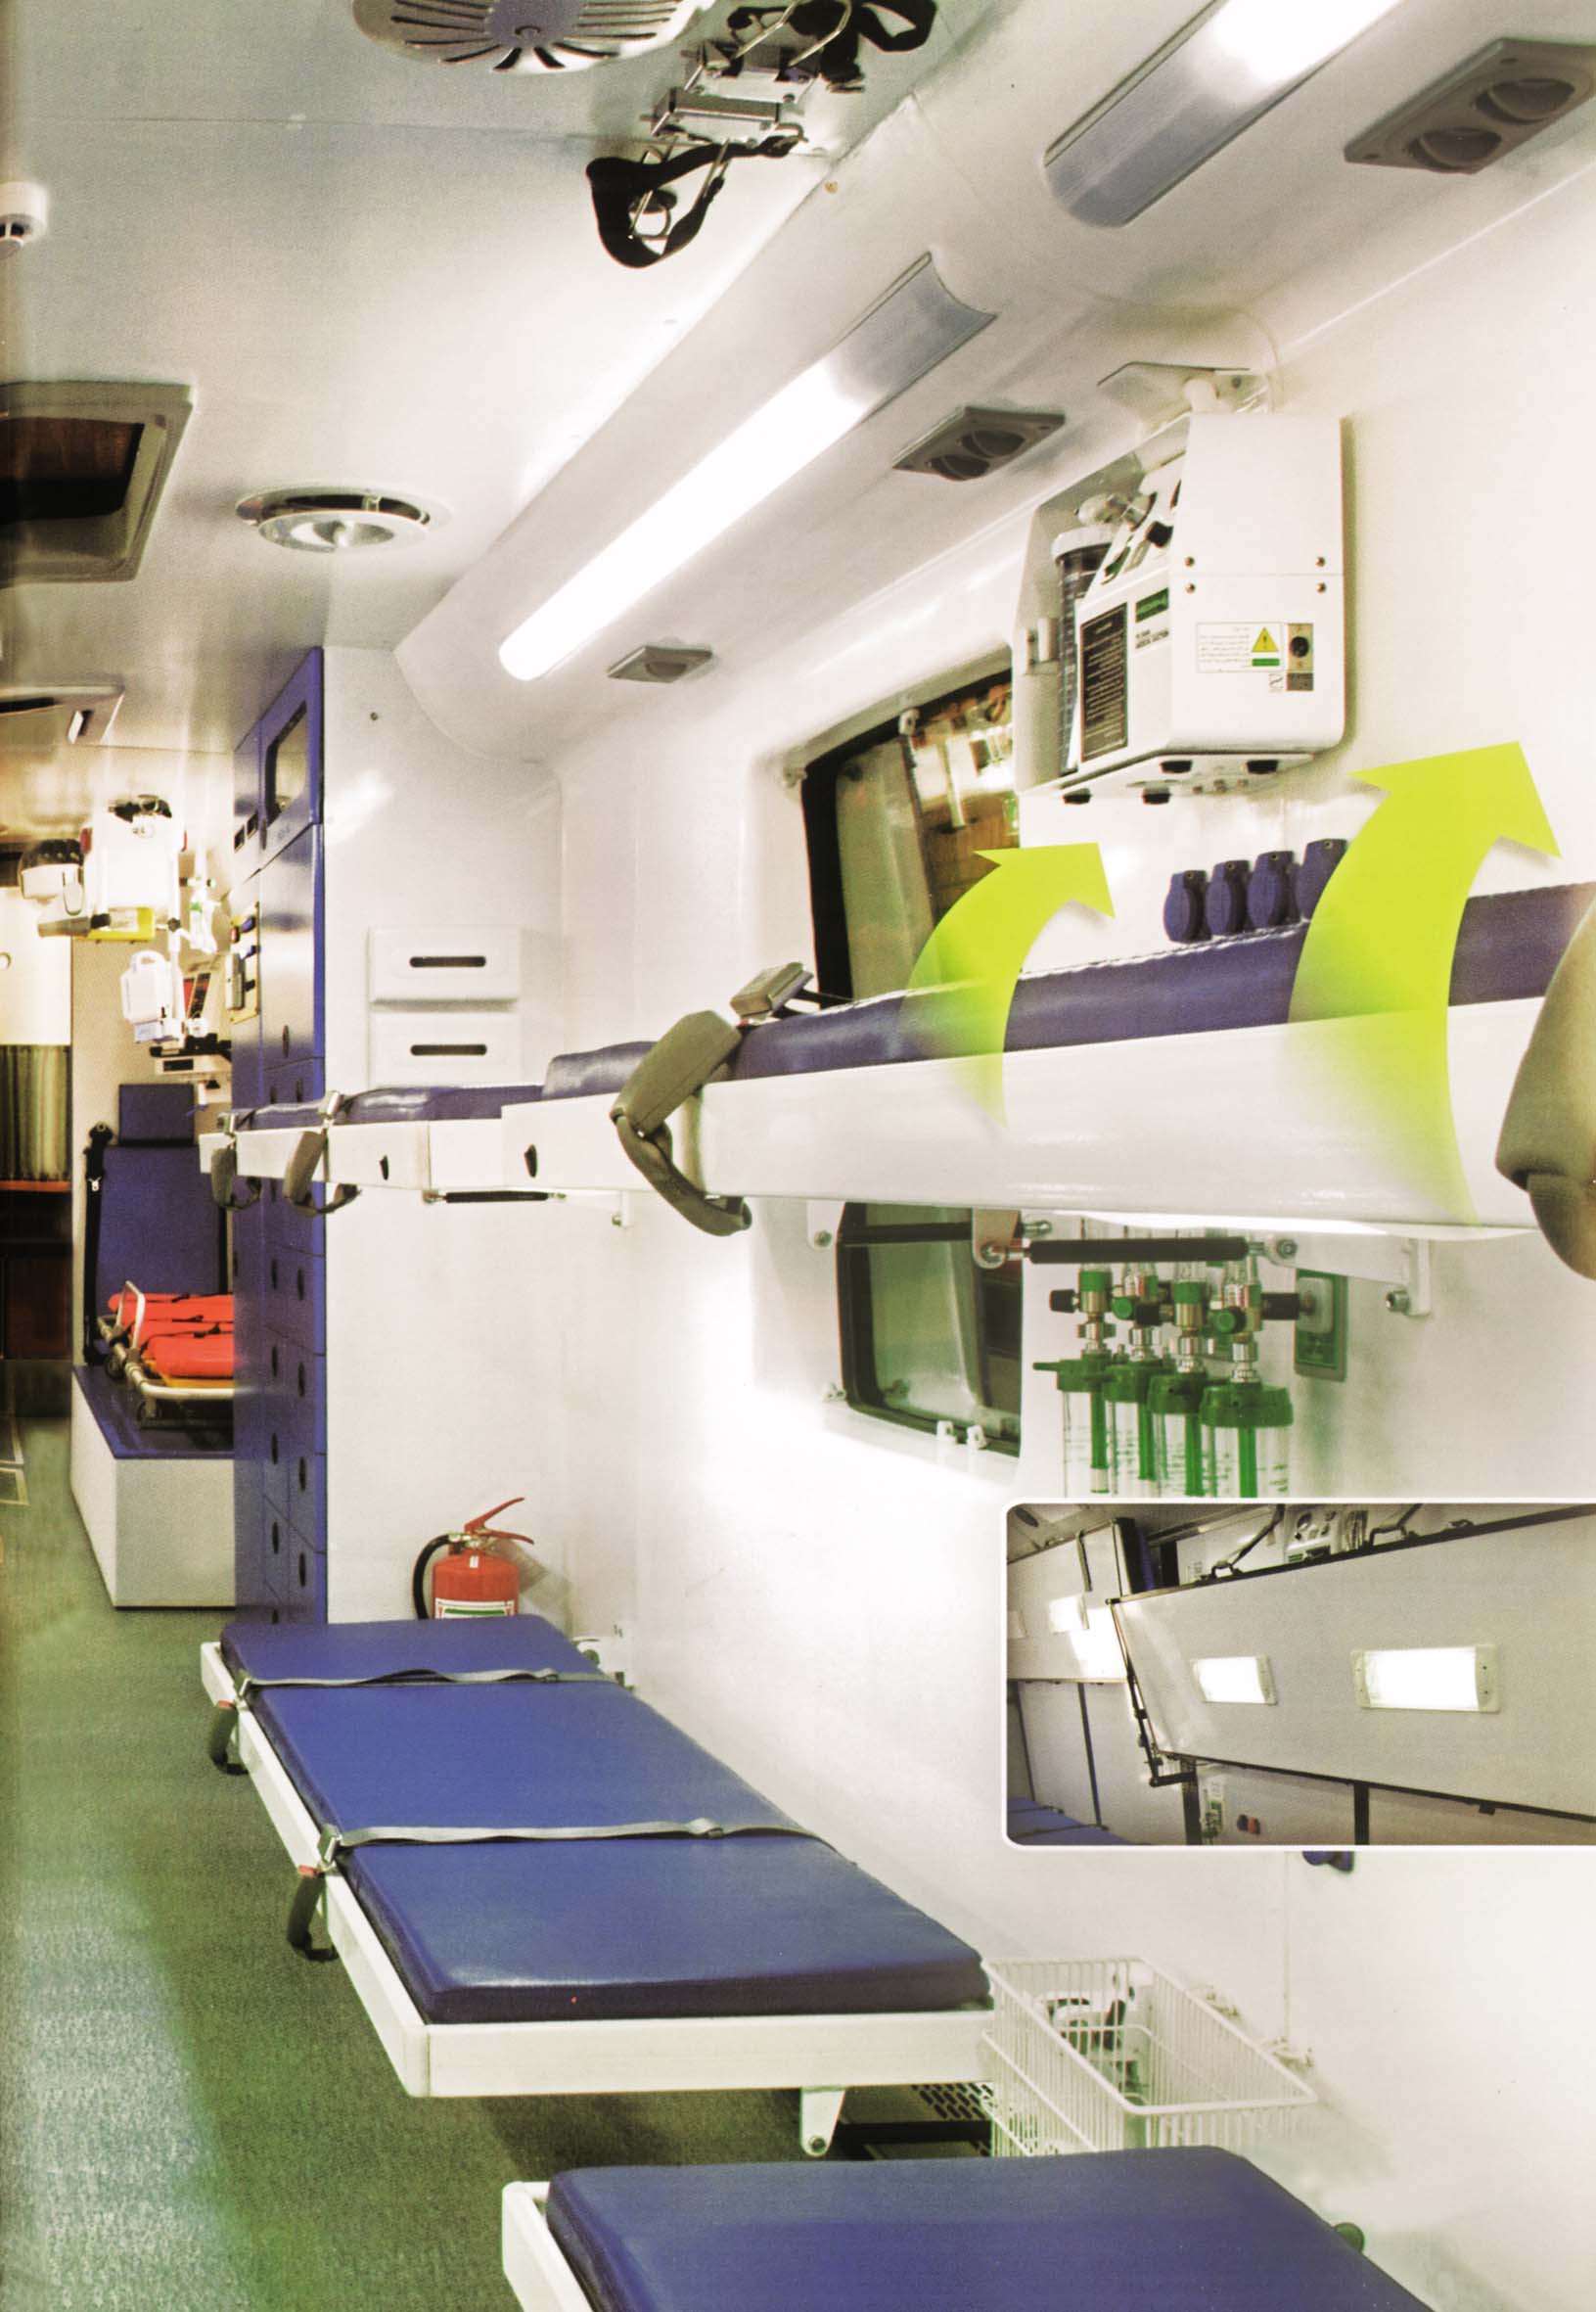 Van ambulance - Paramed International - type B / with oxygen